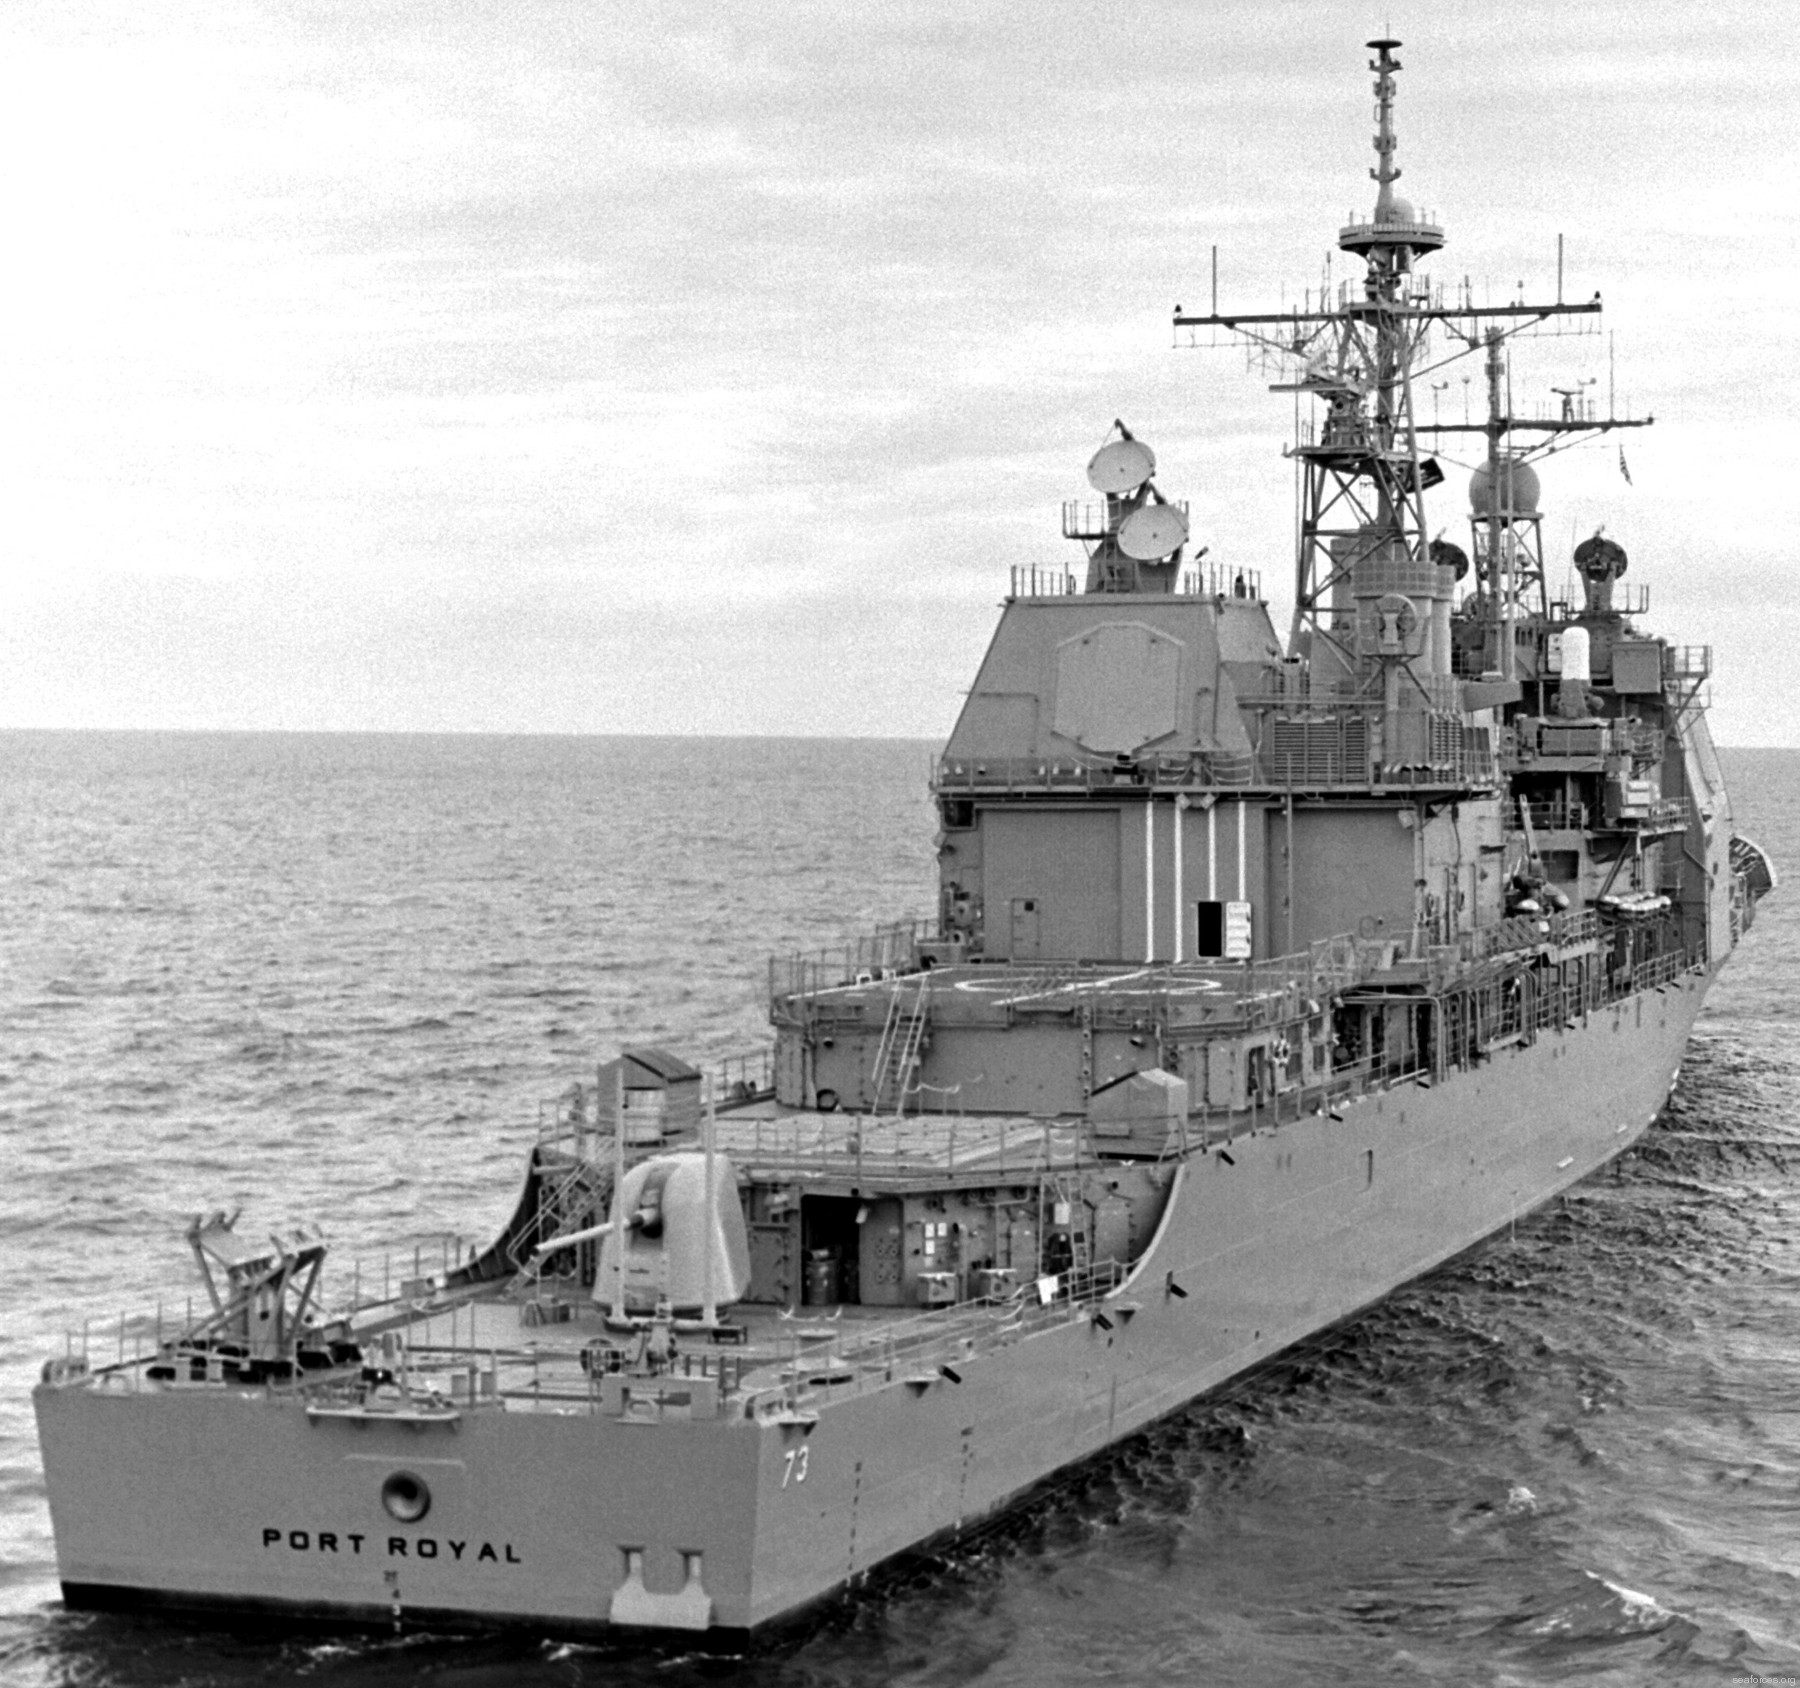 cg-73 uss port royal ticonderoga class guided missile cruiser navy 44 trials